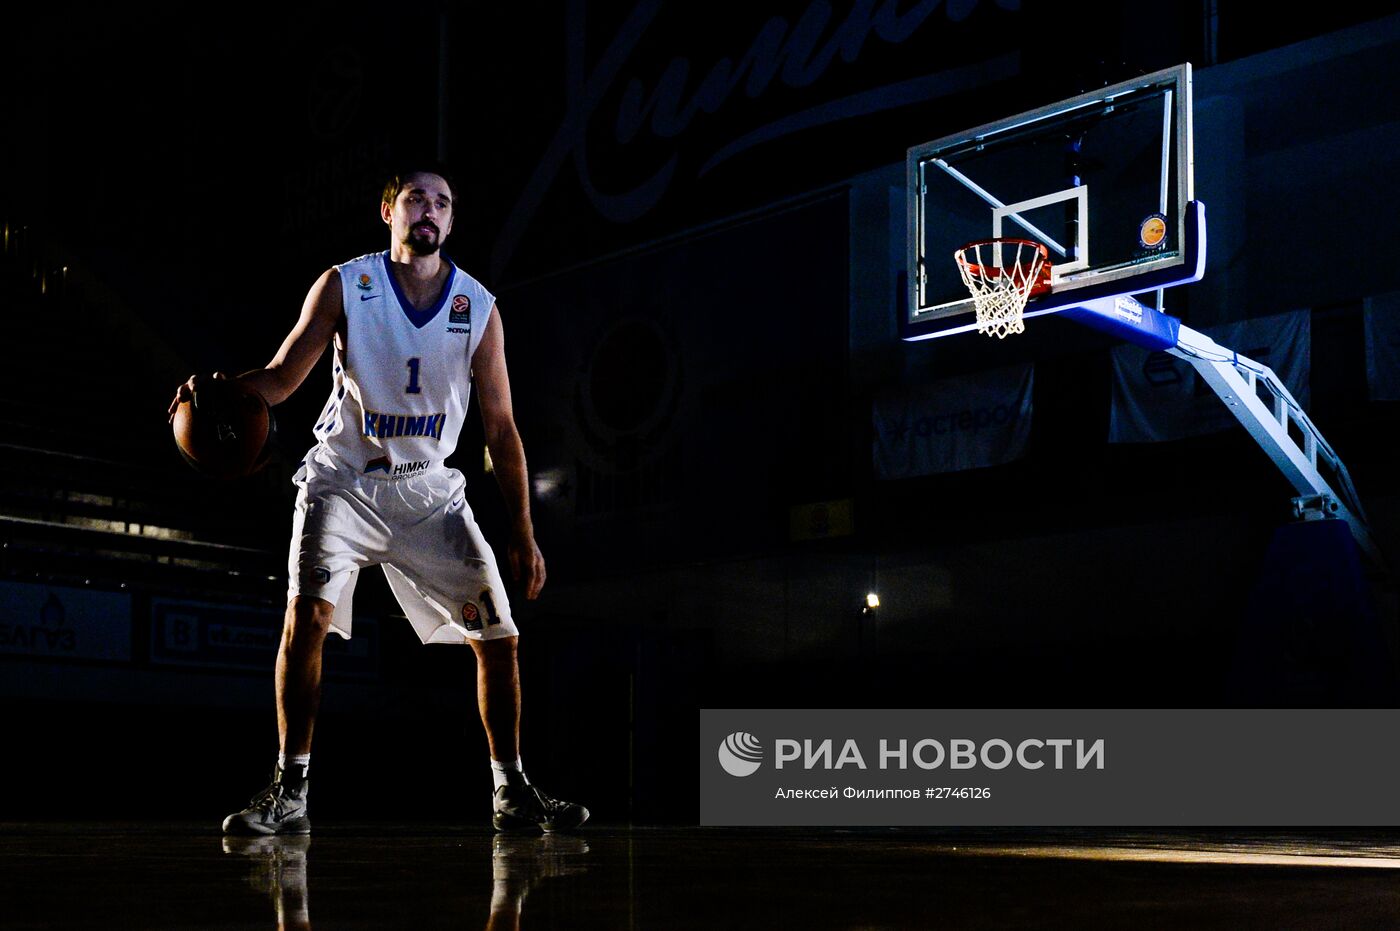 Баскетболист БК "Химки" Алексей Швед